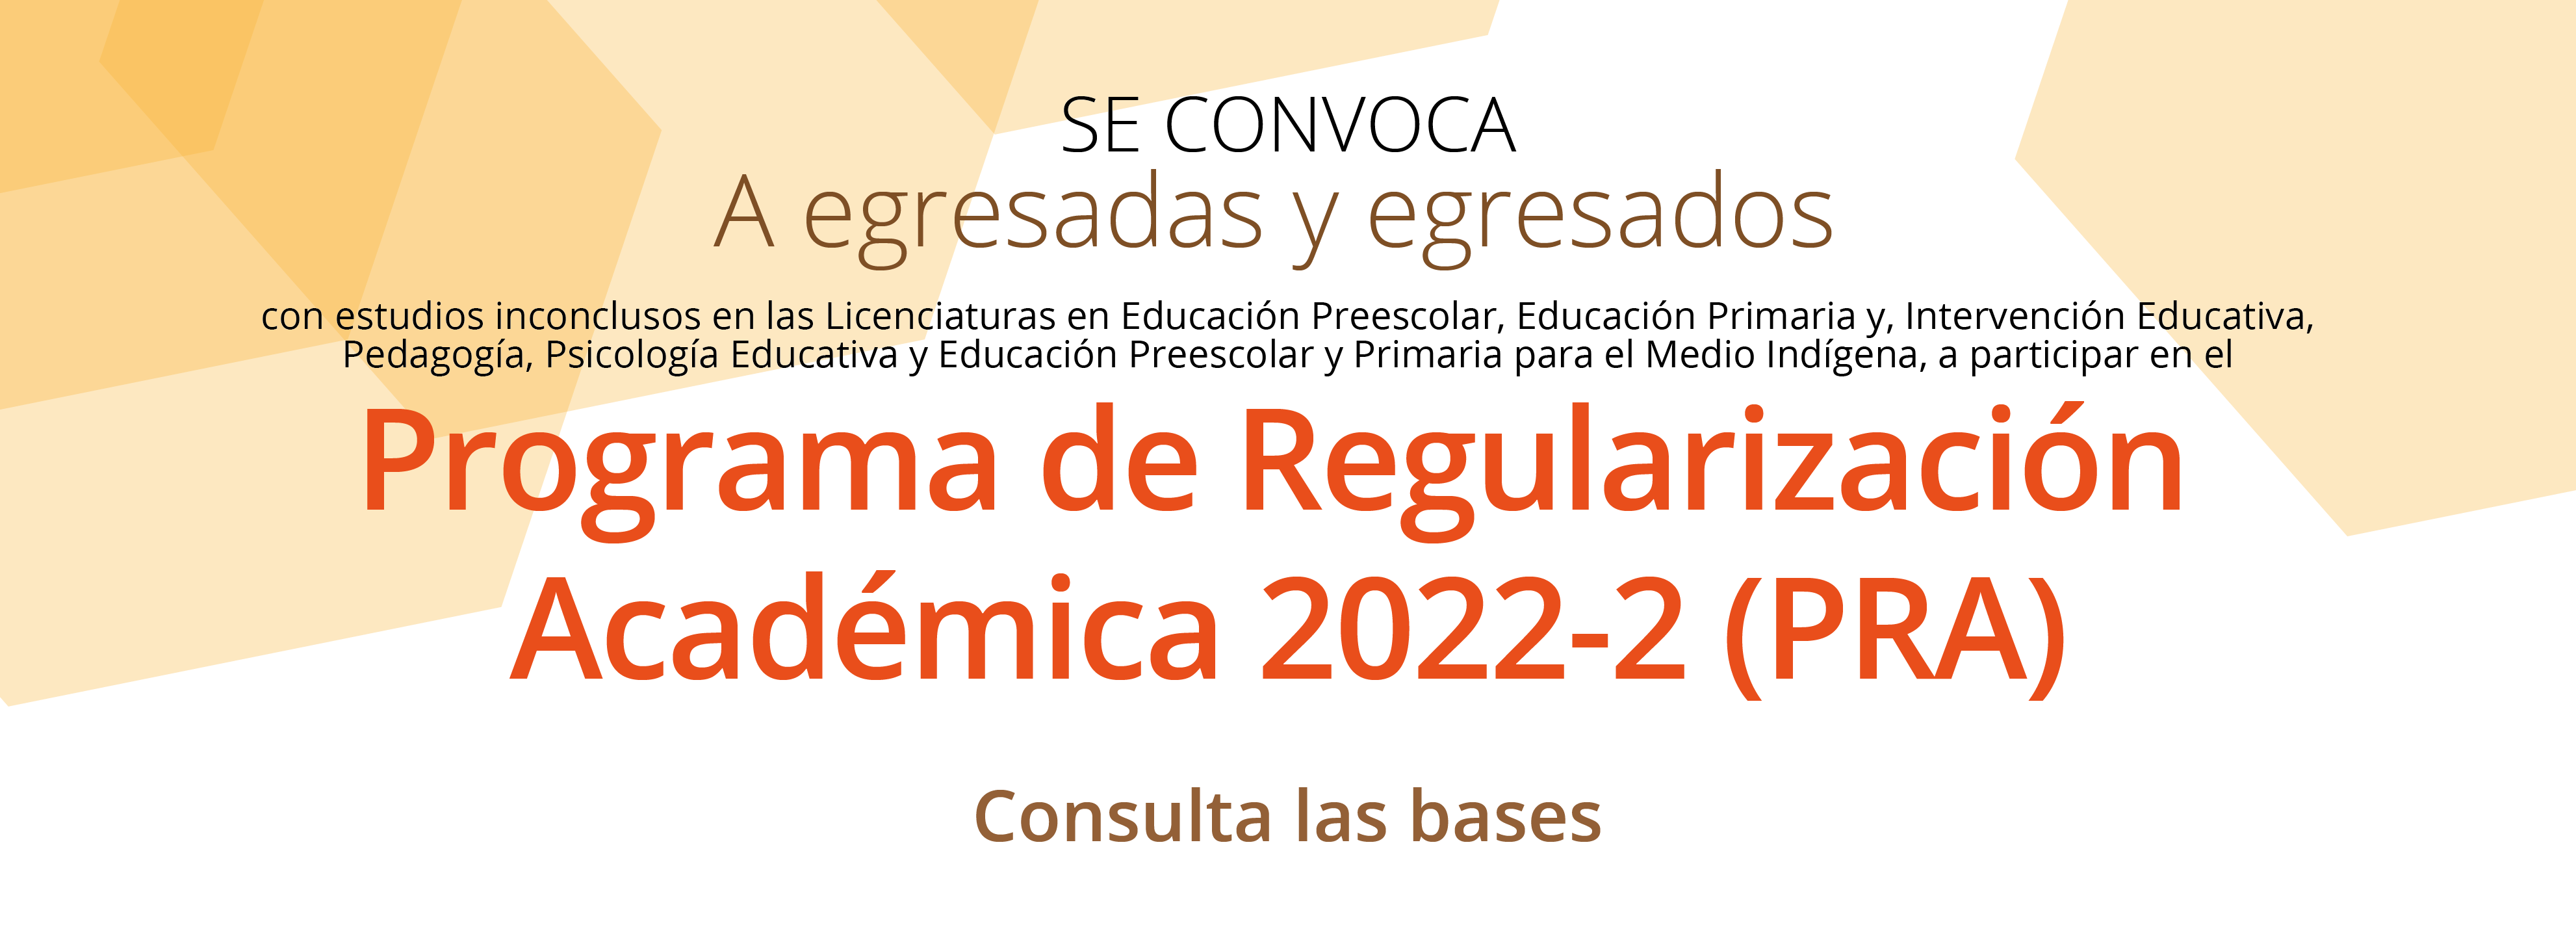 Convocatoria_Programa_de_Regularizacion_Academica_2022-2_PRA_Egresadosa_banner_web